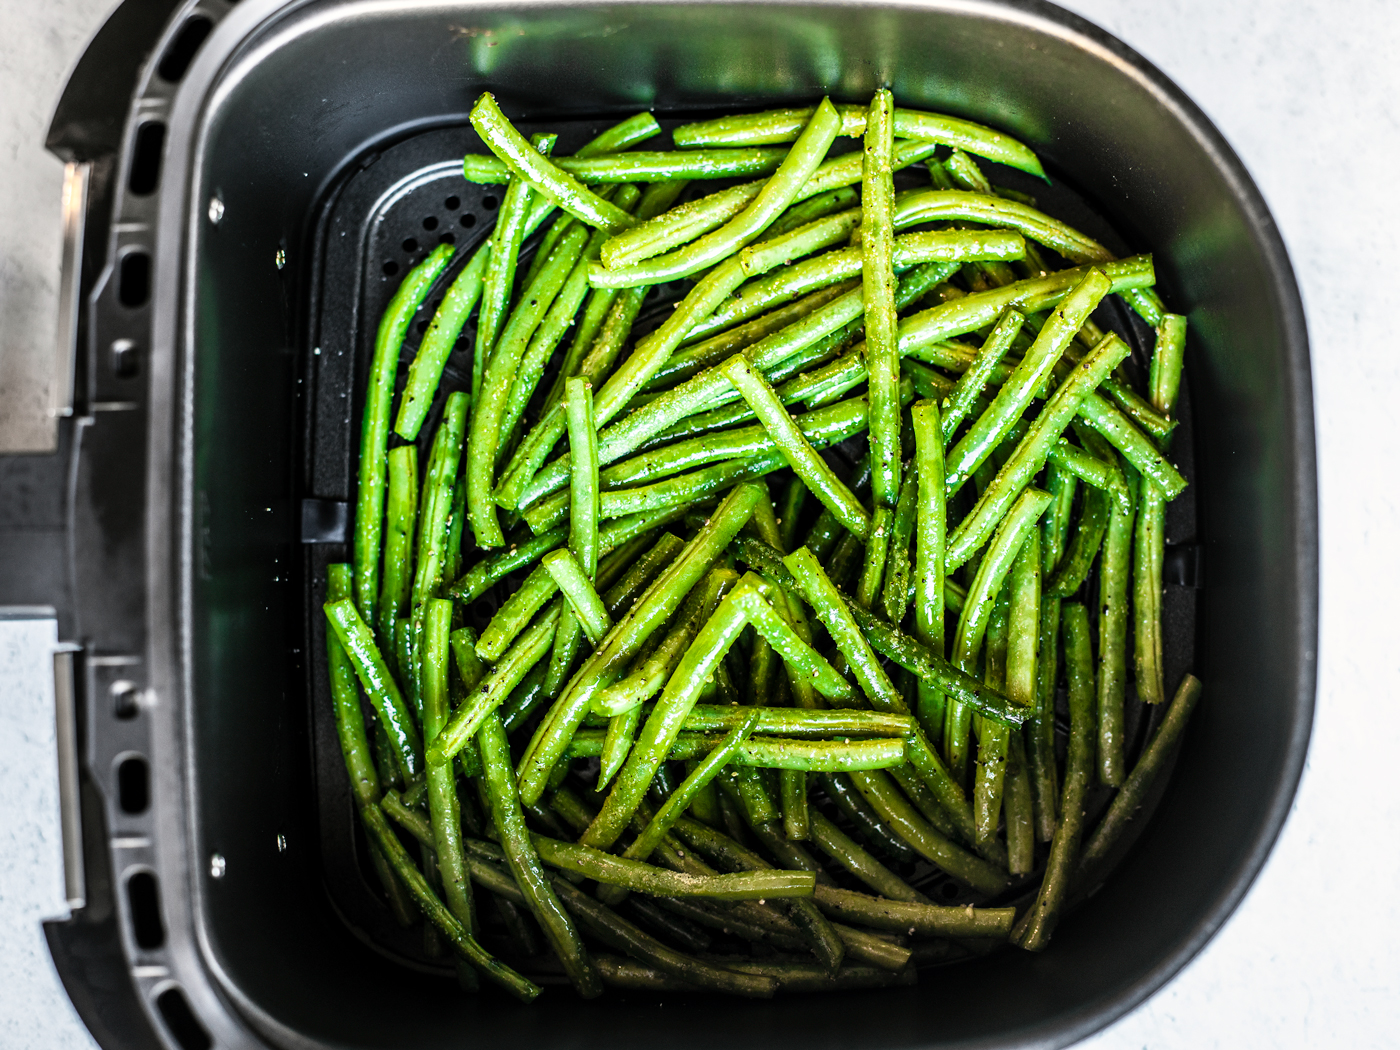 Green beans in air fryer basket.